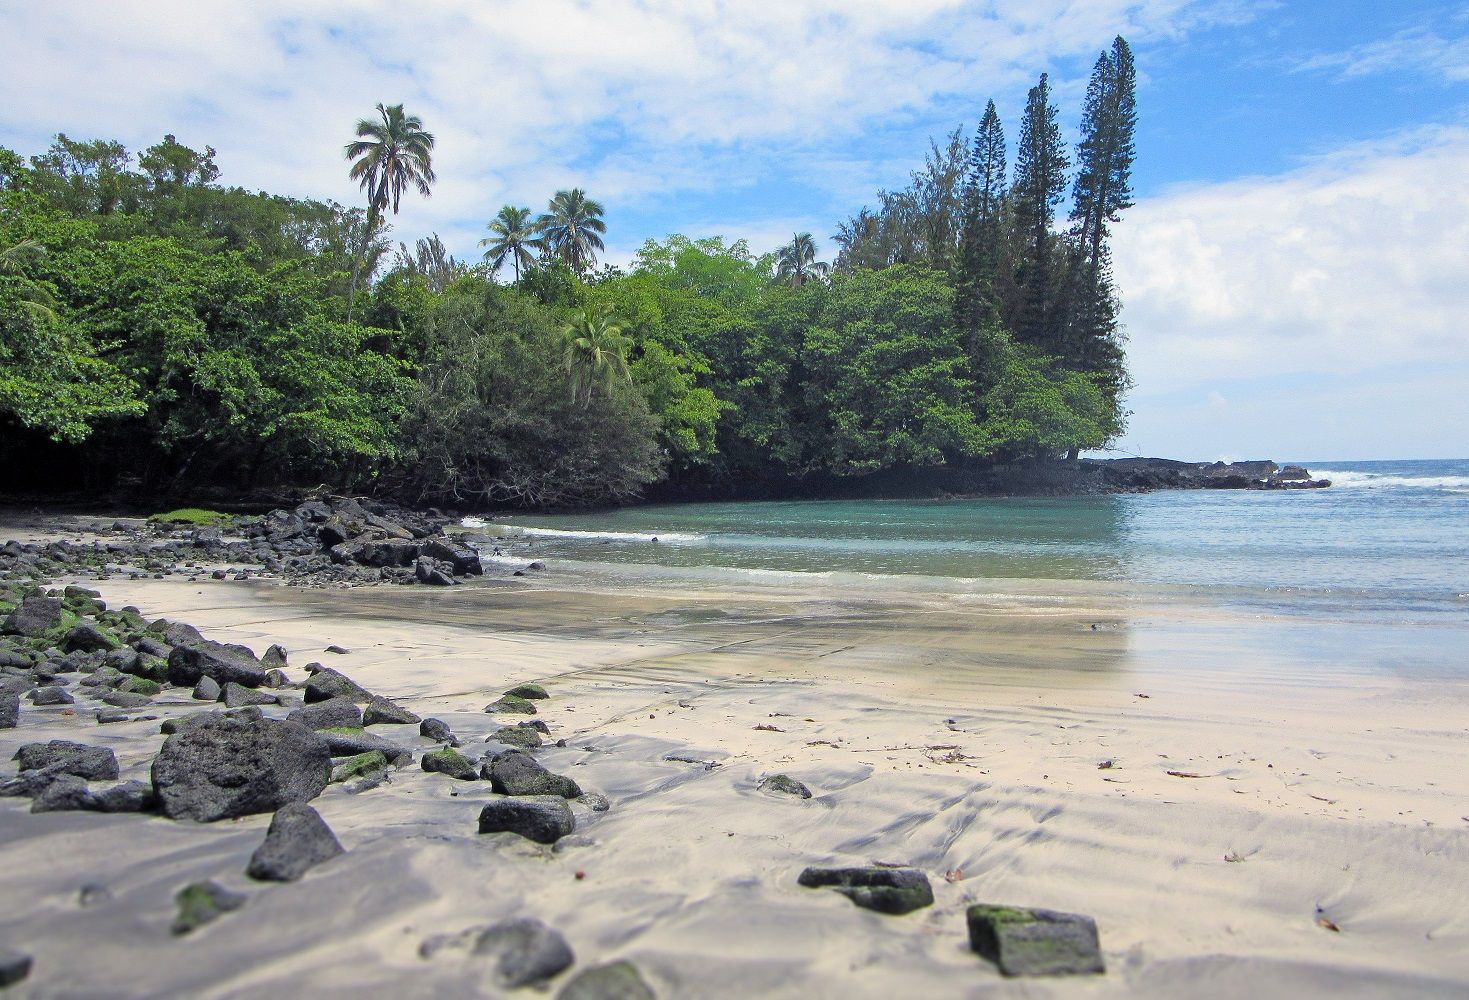 Hāʻena beach awaits the hiker at the trail's end.